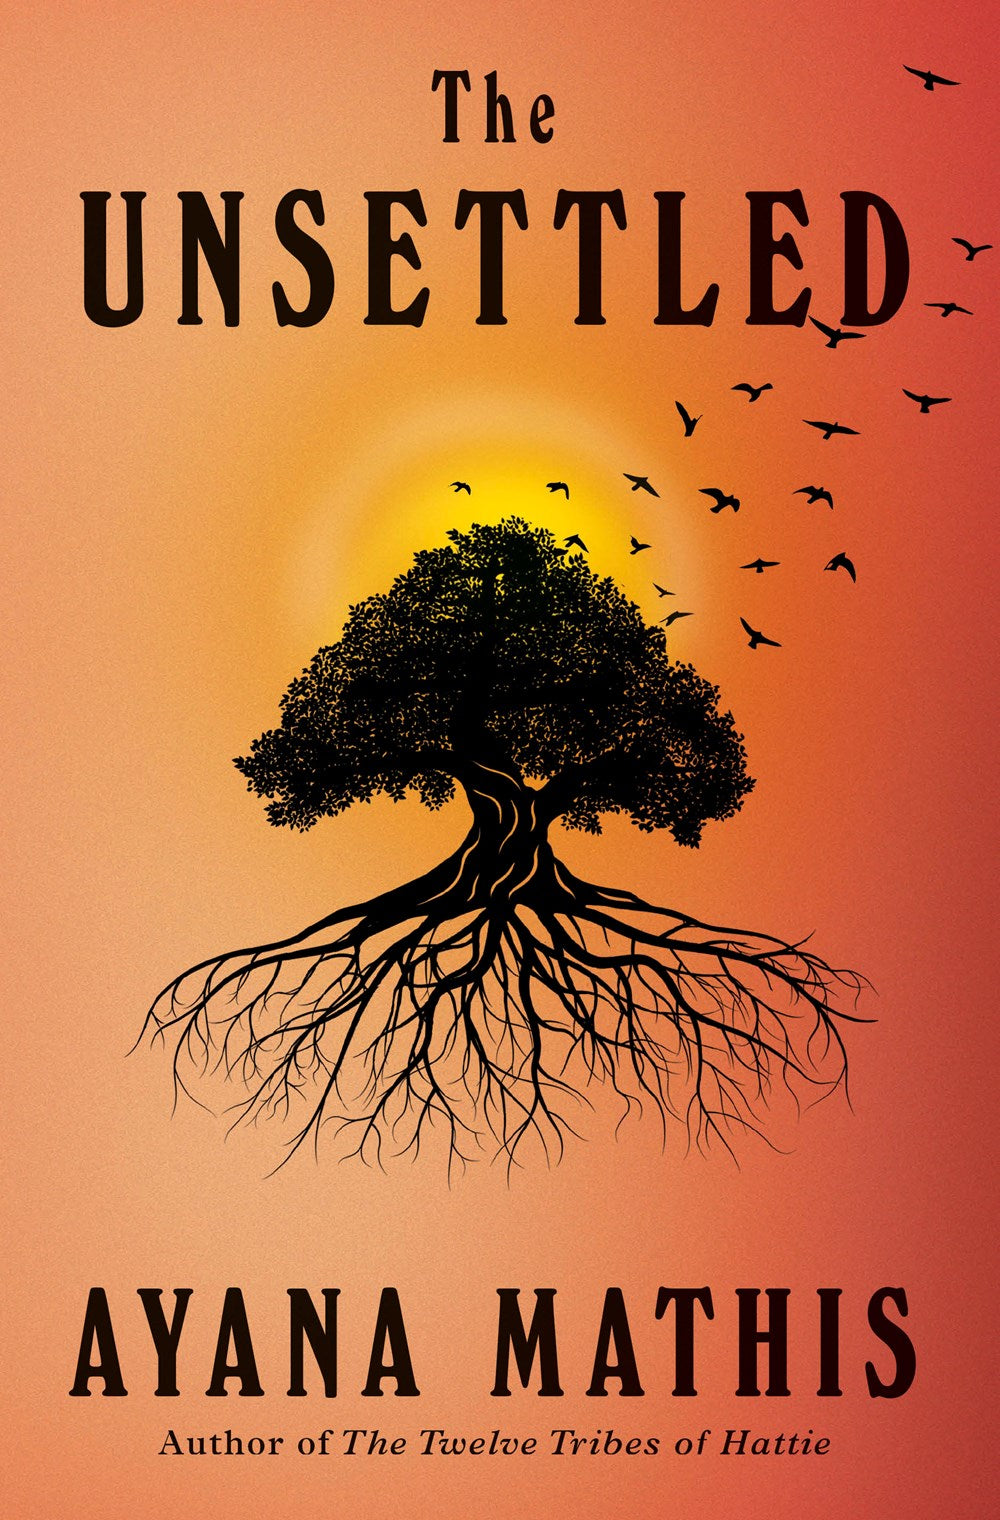 The Unsettled: A novel